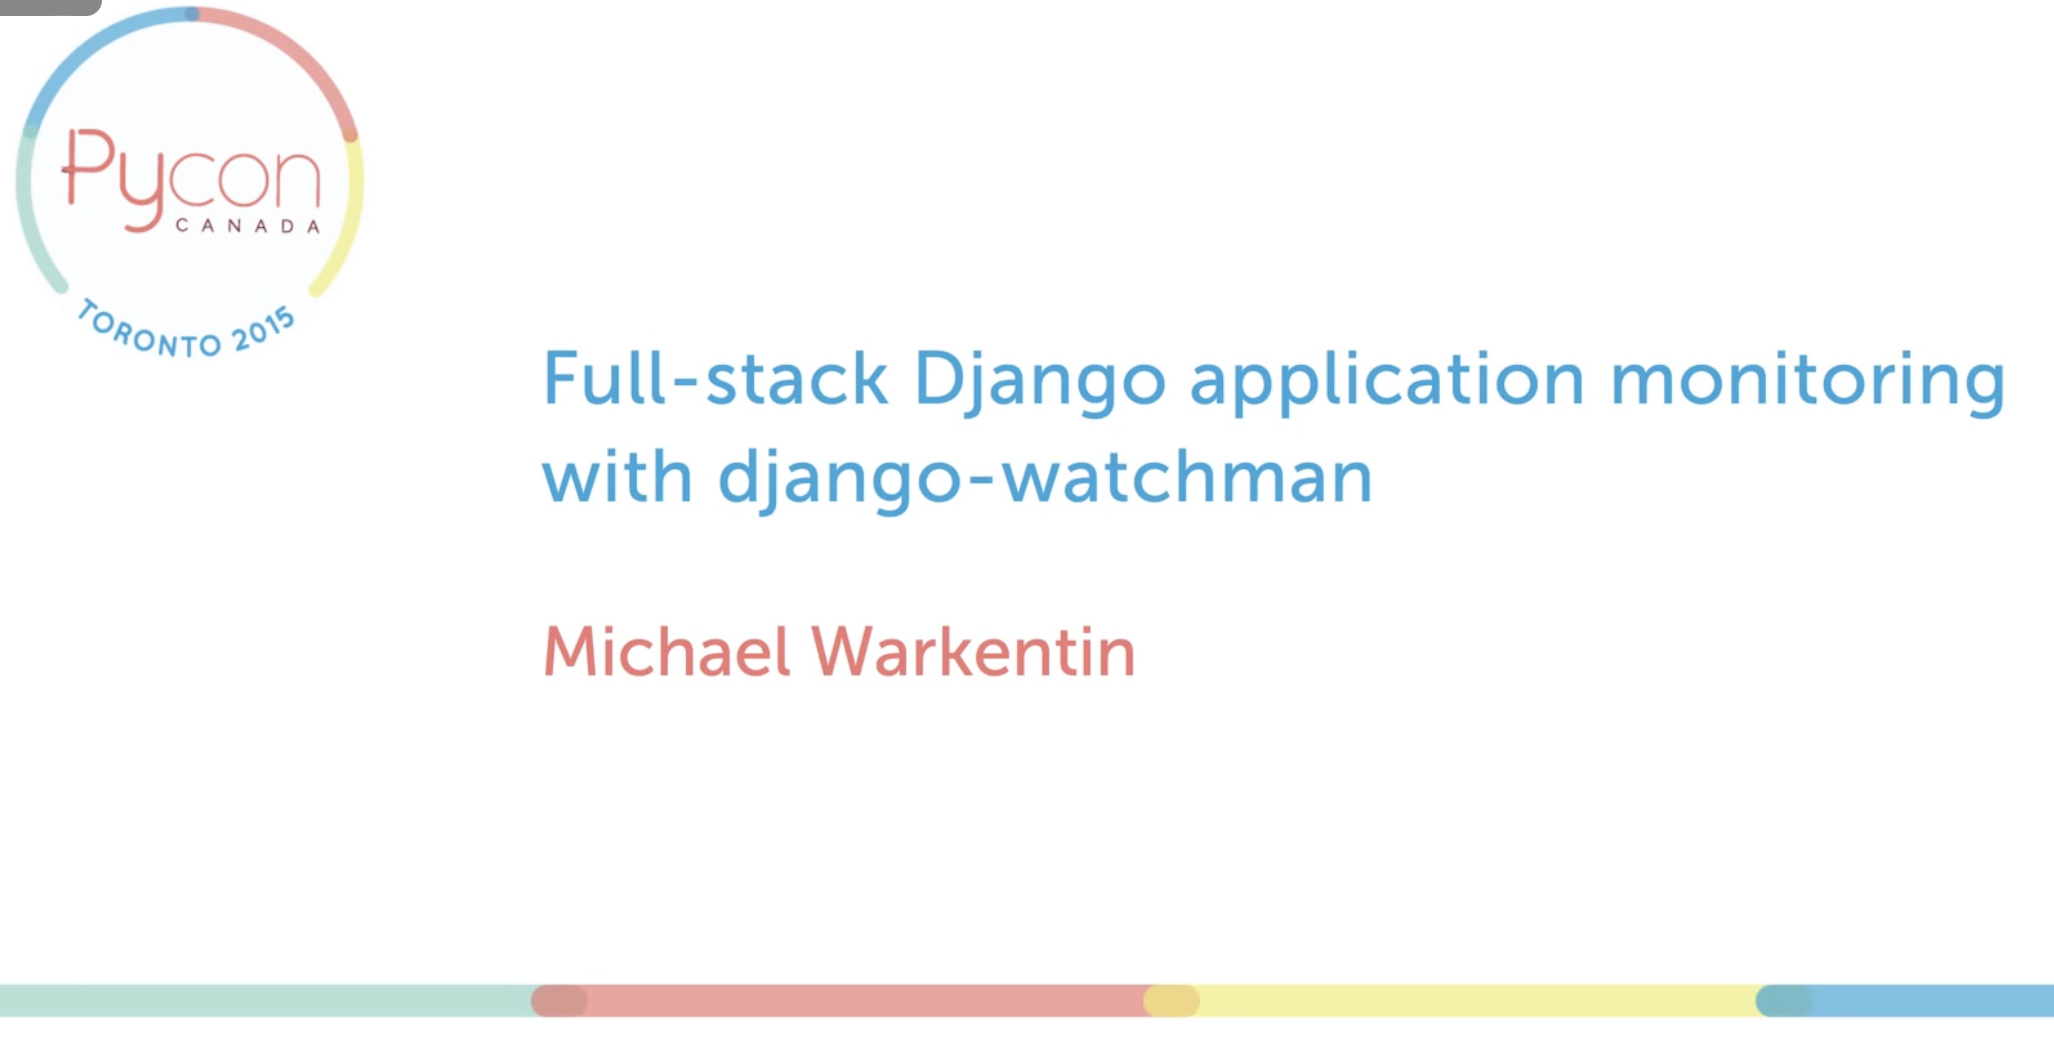 https://mwarkentin-snaps.s3.amazonaws.com/Full-stack_Django_application_monitoring_with_django-watchman_Michael_Warkentin_-_YouTube_2022-03-23_08-34-24.png